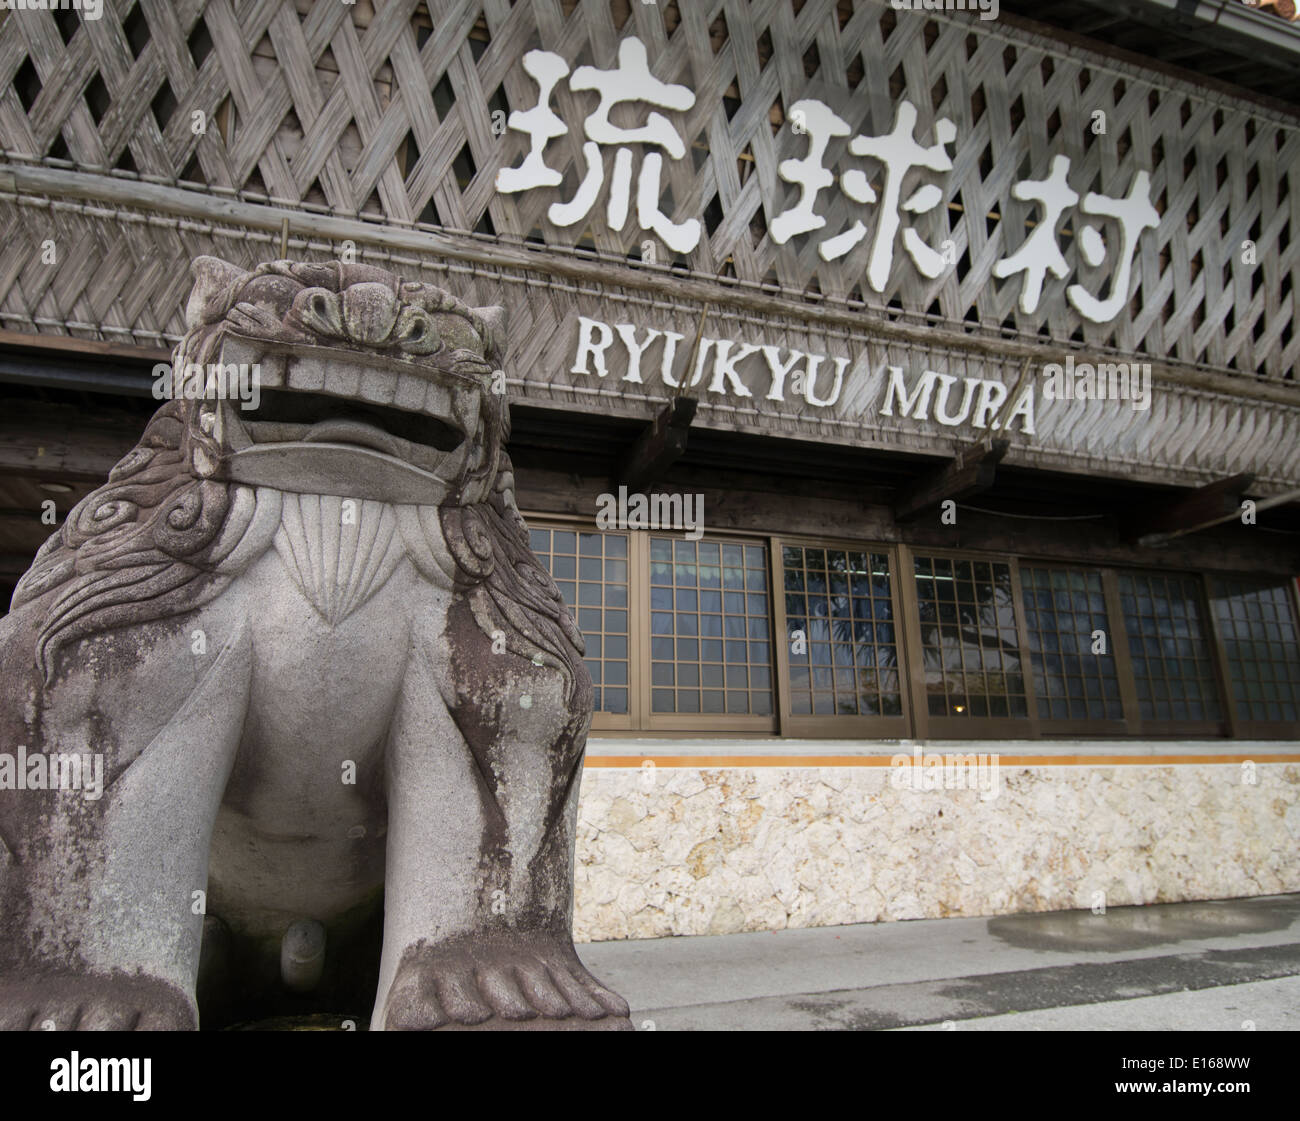 Shisa Löwe Hund Statue außerhalb Ryukyu Mura, Yomitan, Okinawa, Japan Stockfoto